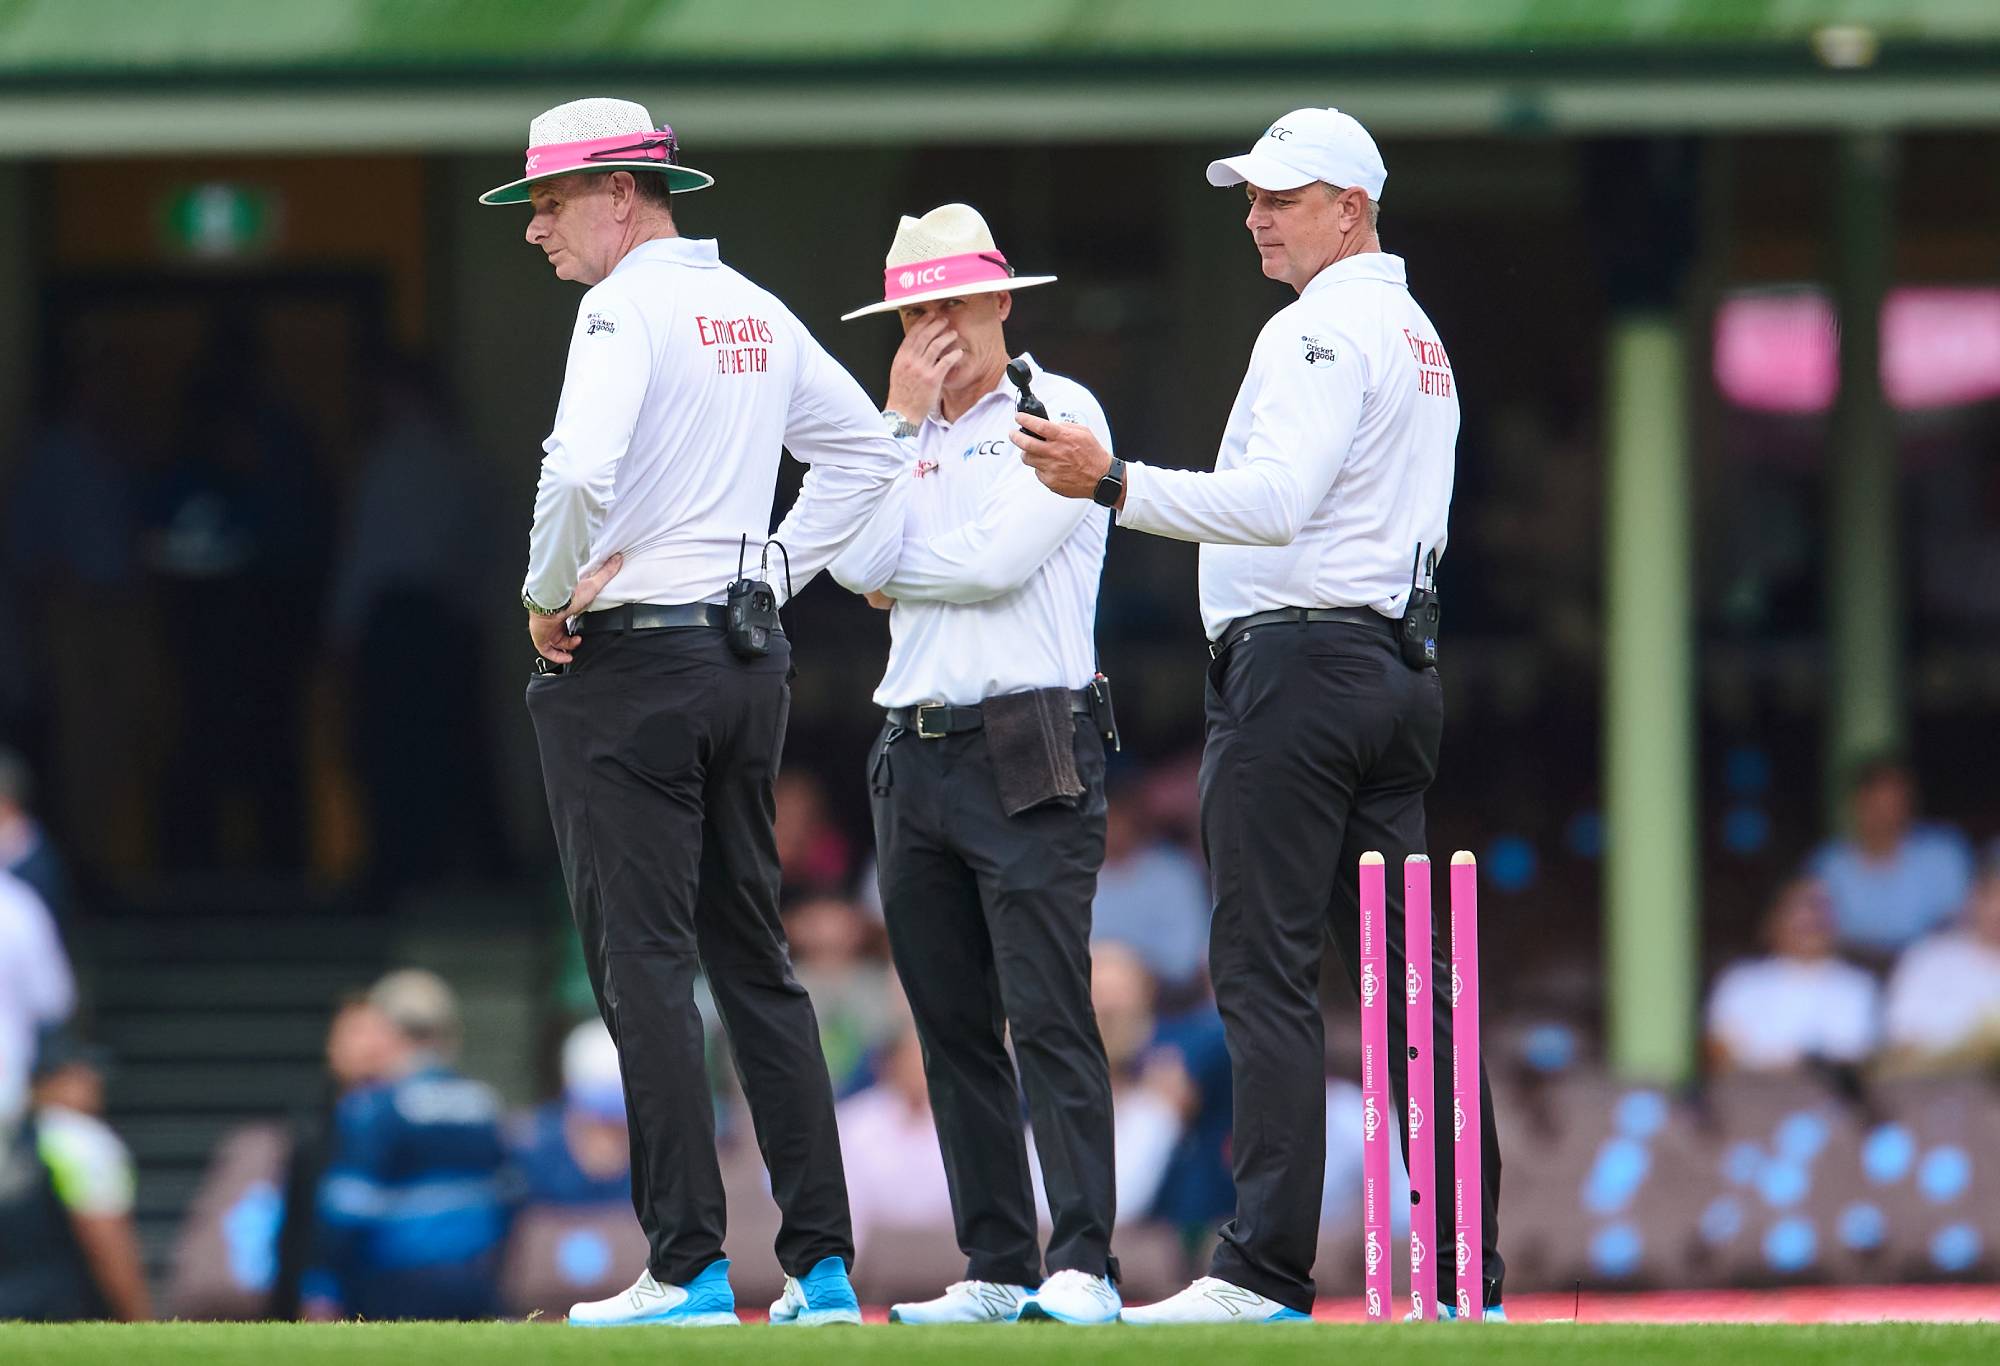 Berita Kriket: Bola merah muda tidak akan memperbaiki kesengsaraan ringan